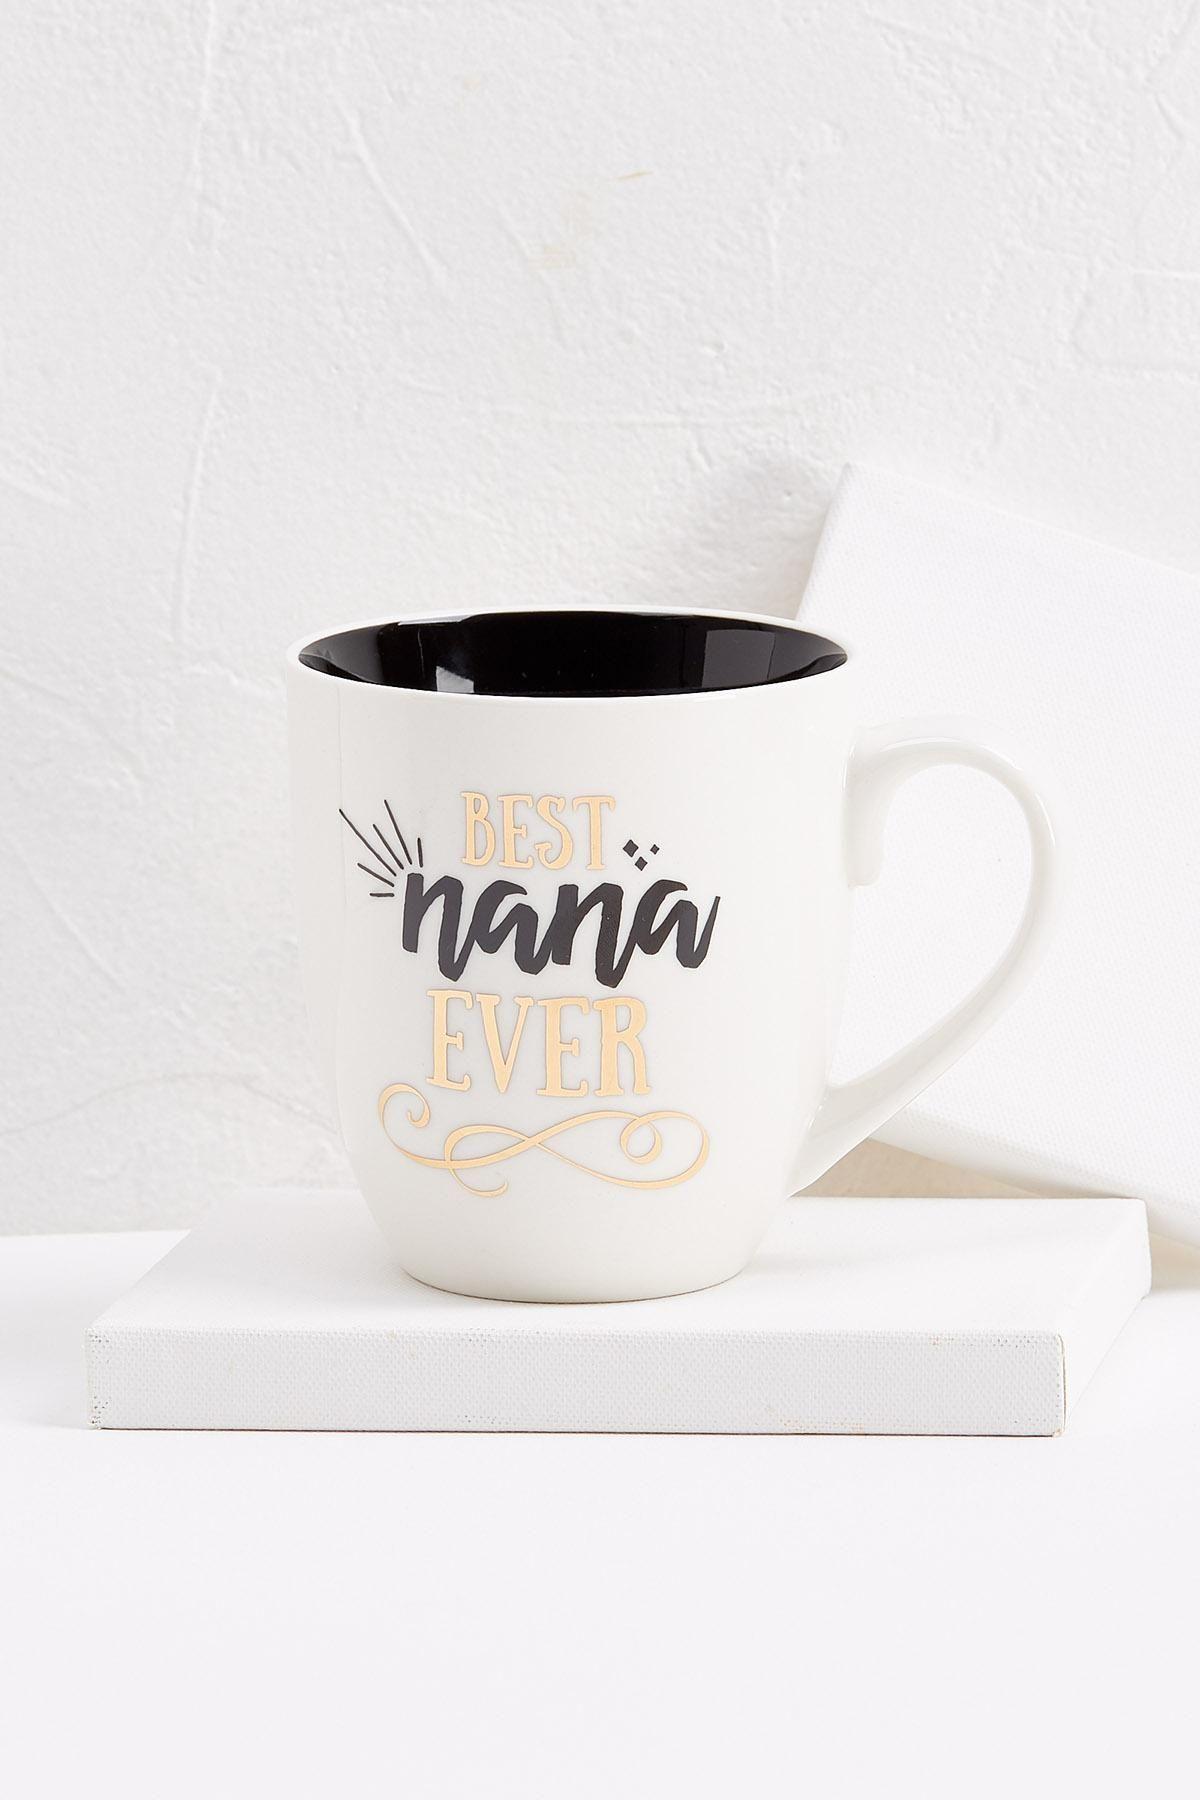 Versona Logo - Versona | best nana ever mug